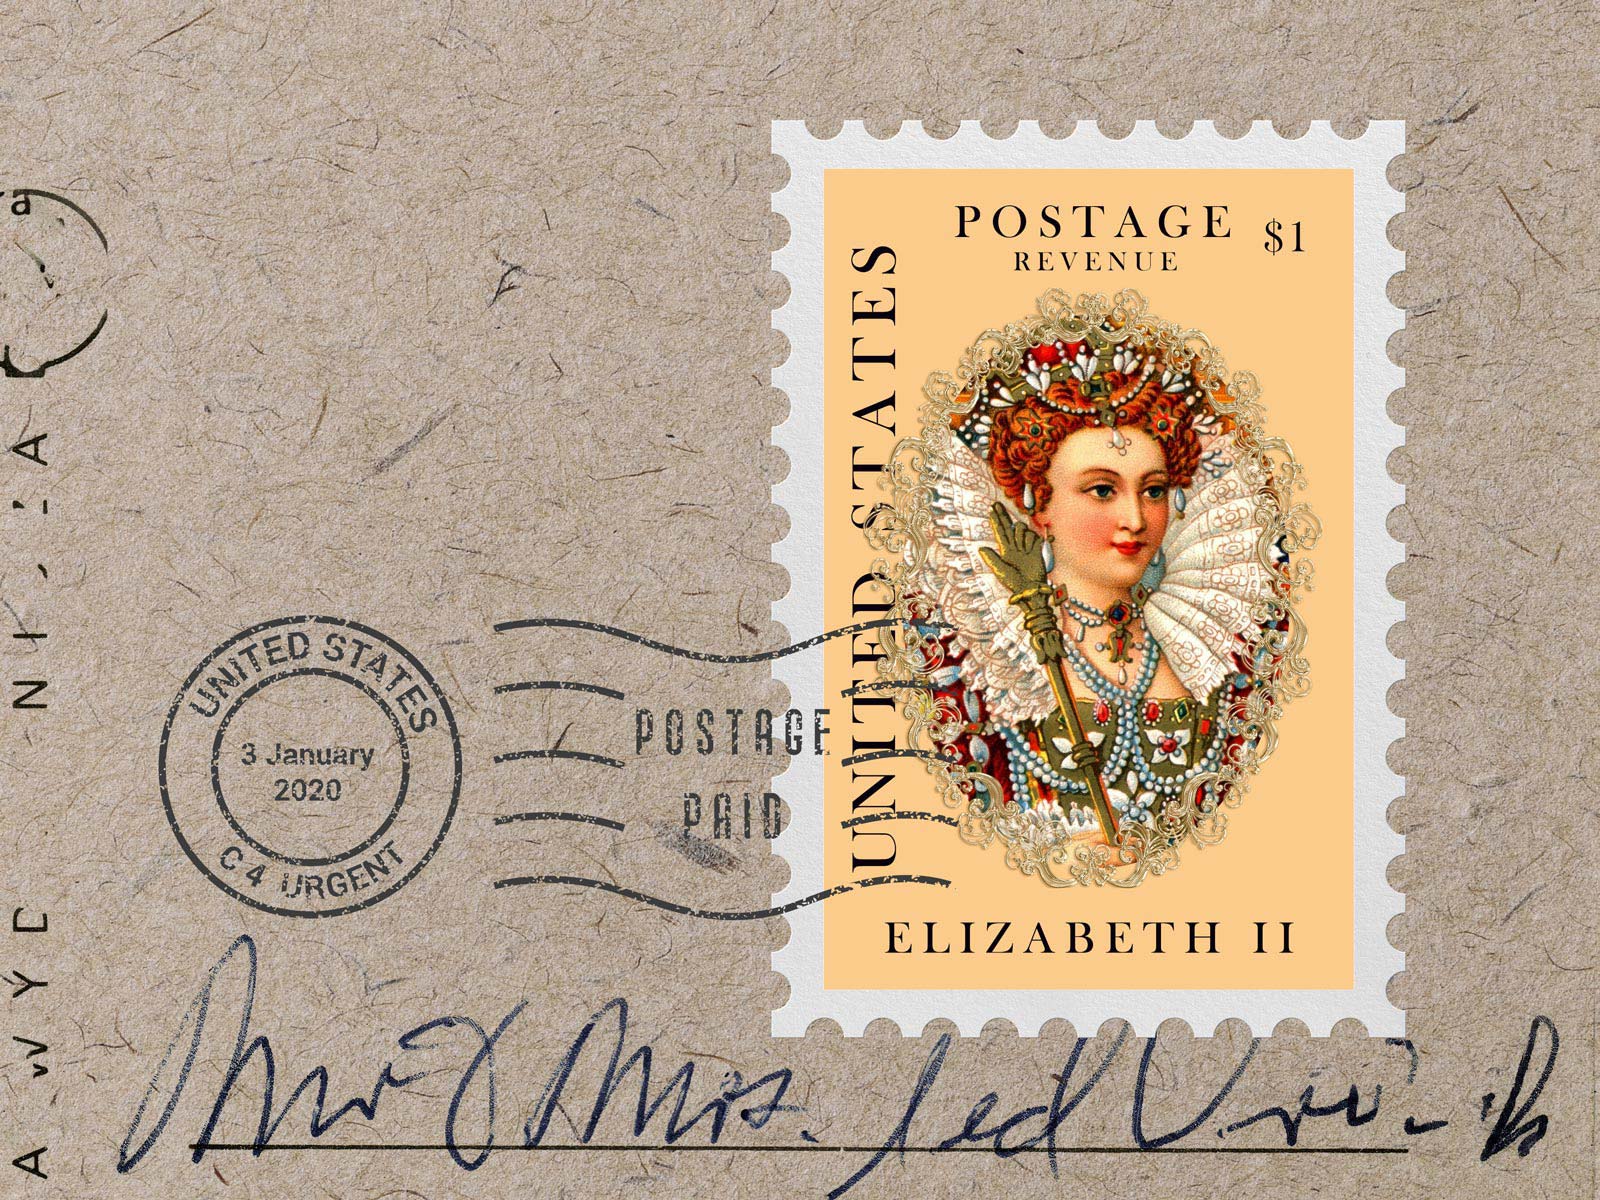 postage stamp images free download